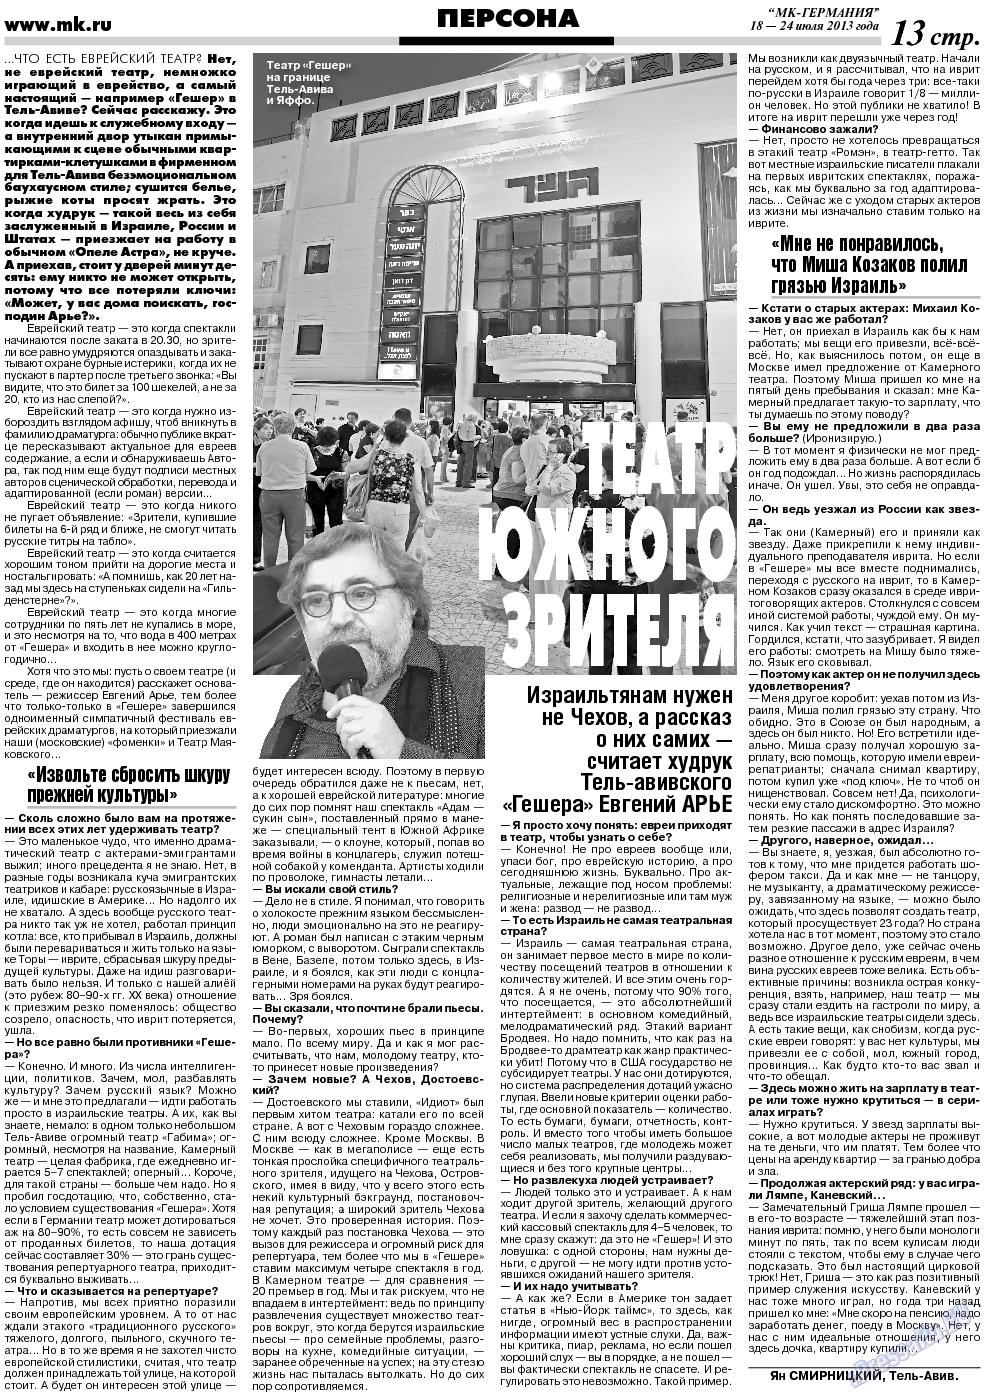 МК-Германия, газета. 2013 №29 стр.13